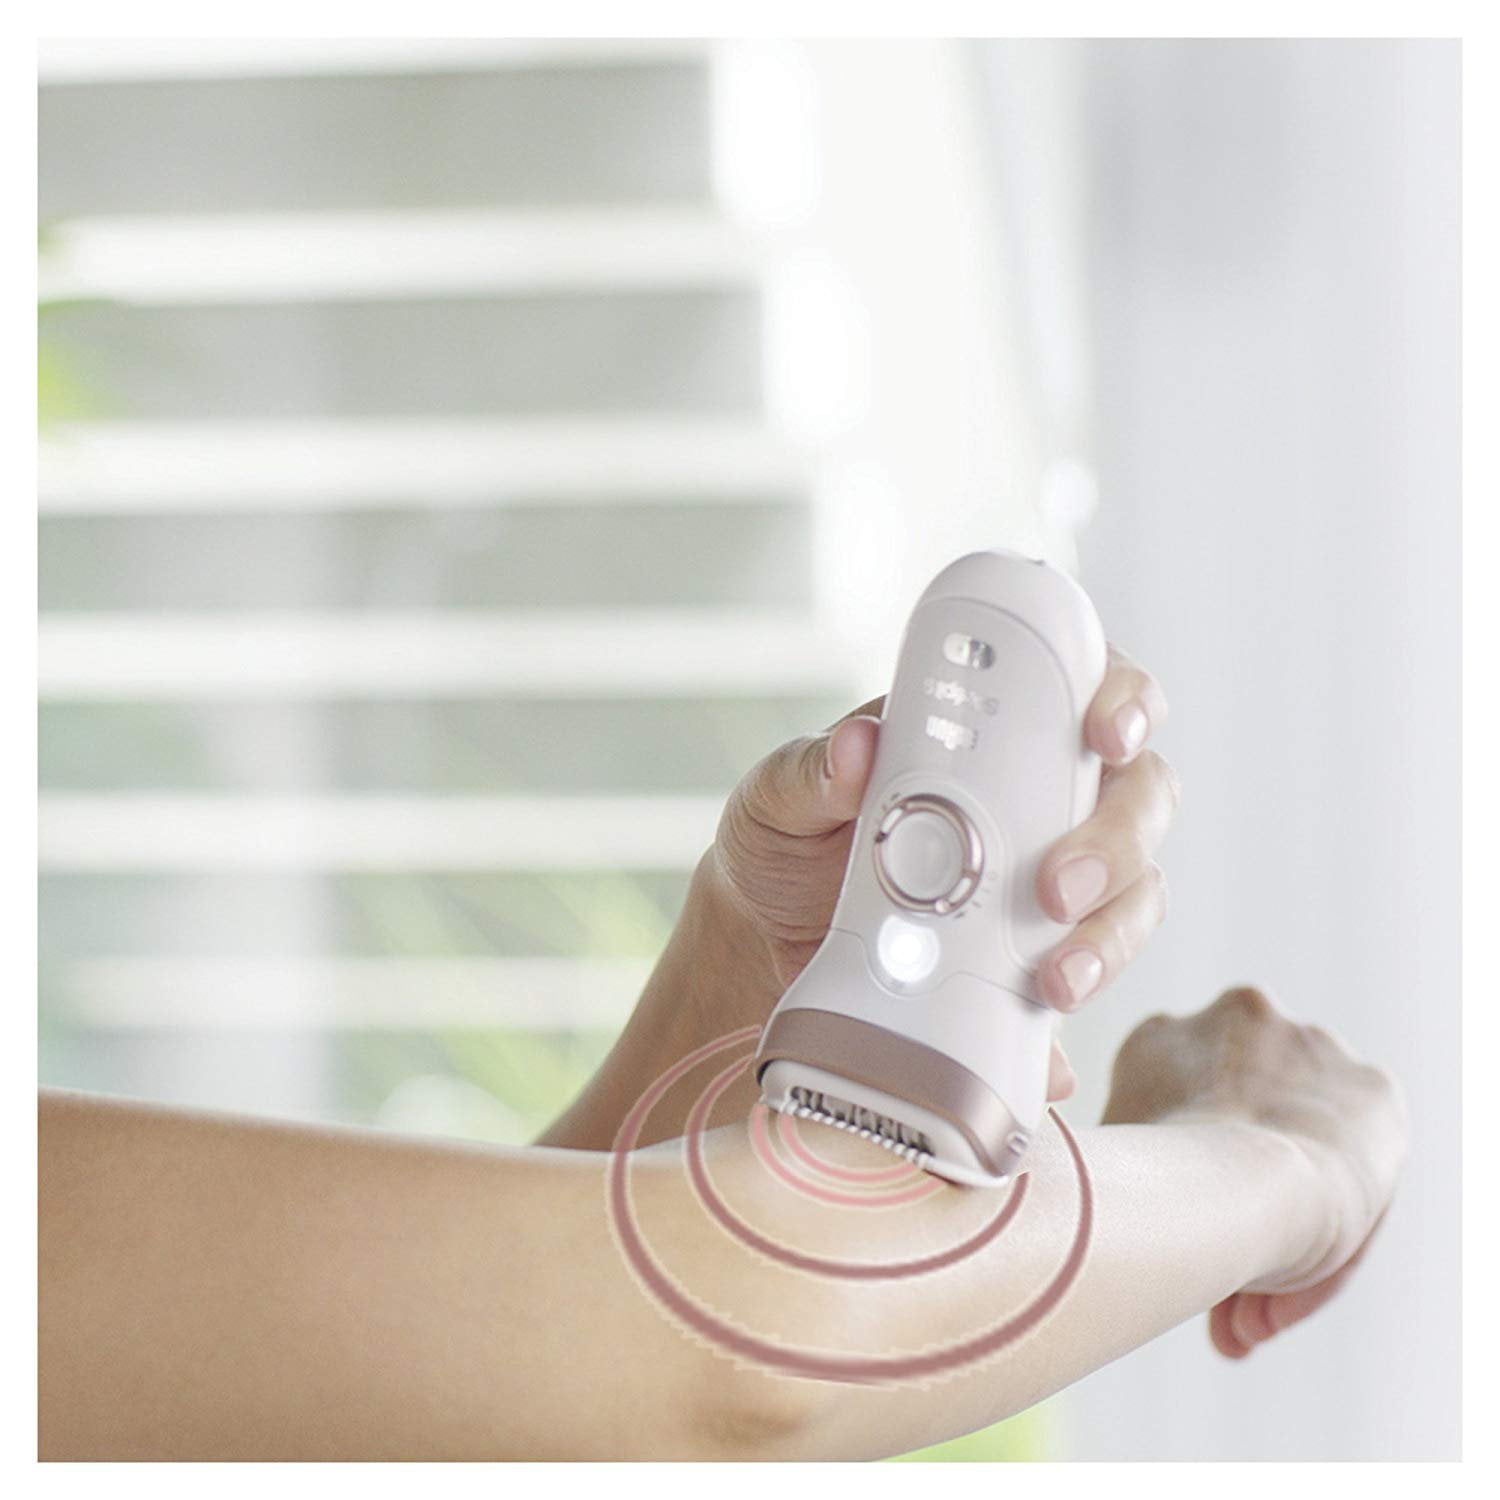 Braun Silk Epil 9 SensoSmart Electric Epilator for Women for sale online